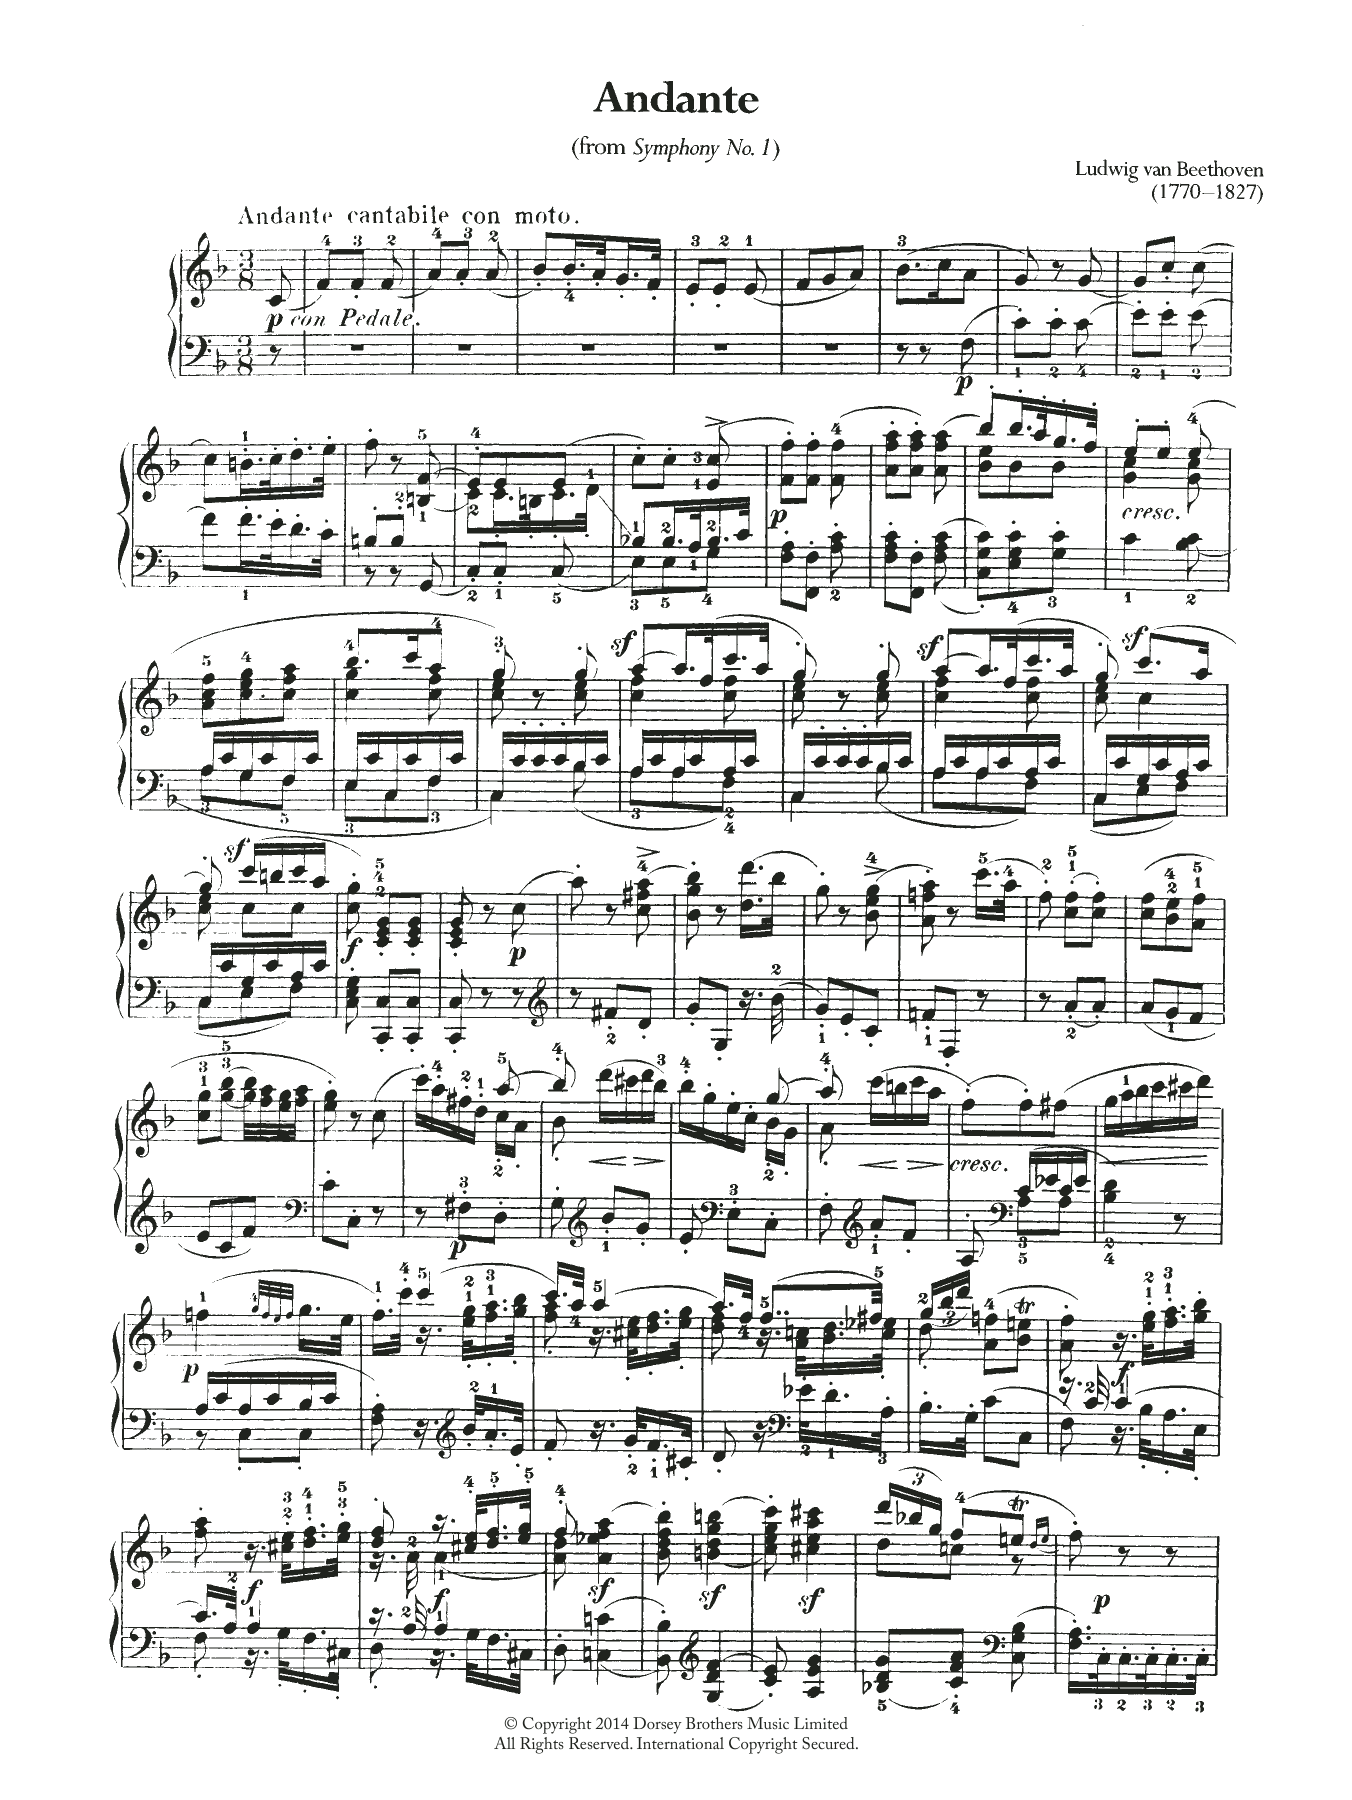 Download Ludwig van Beethoven Symphony No.1, Andante Sheet Music